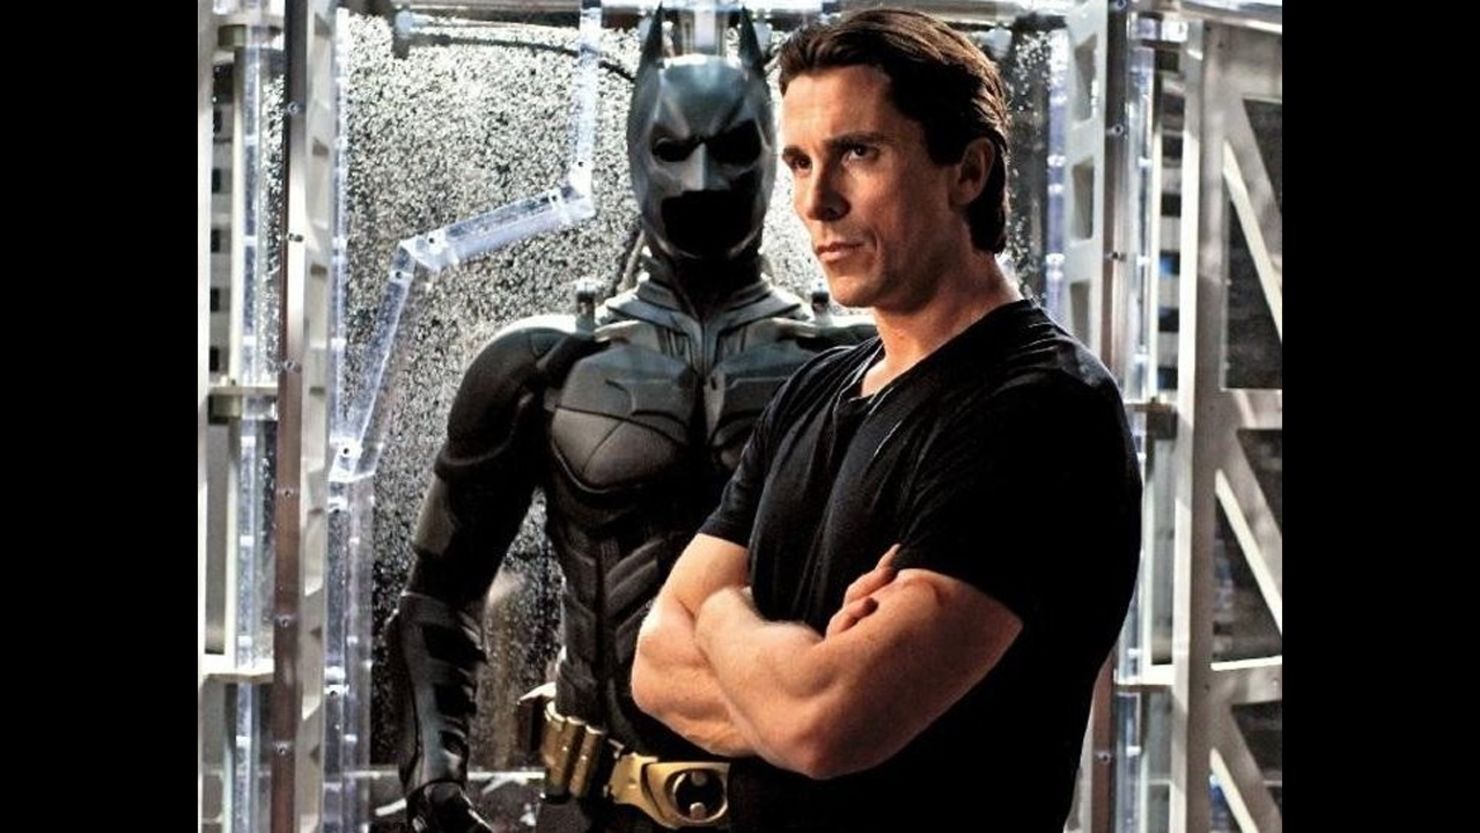 Christian Bale stars as Bruce Wayne/Batman in 'The Dark Knight Rises."

